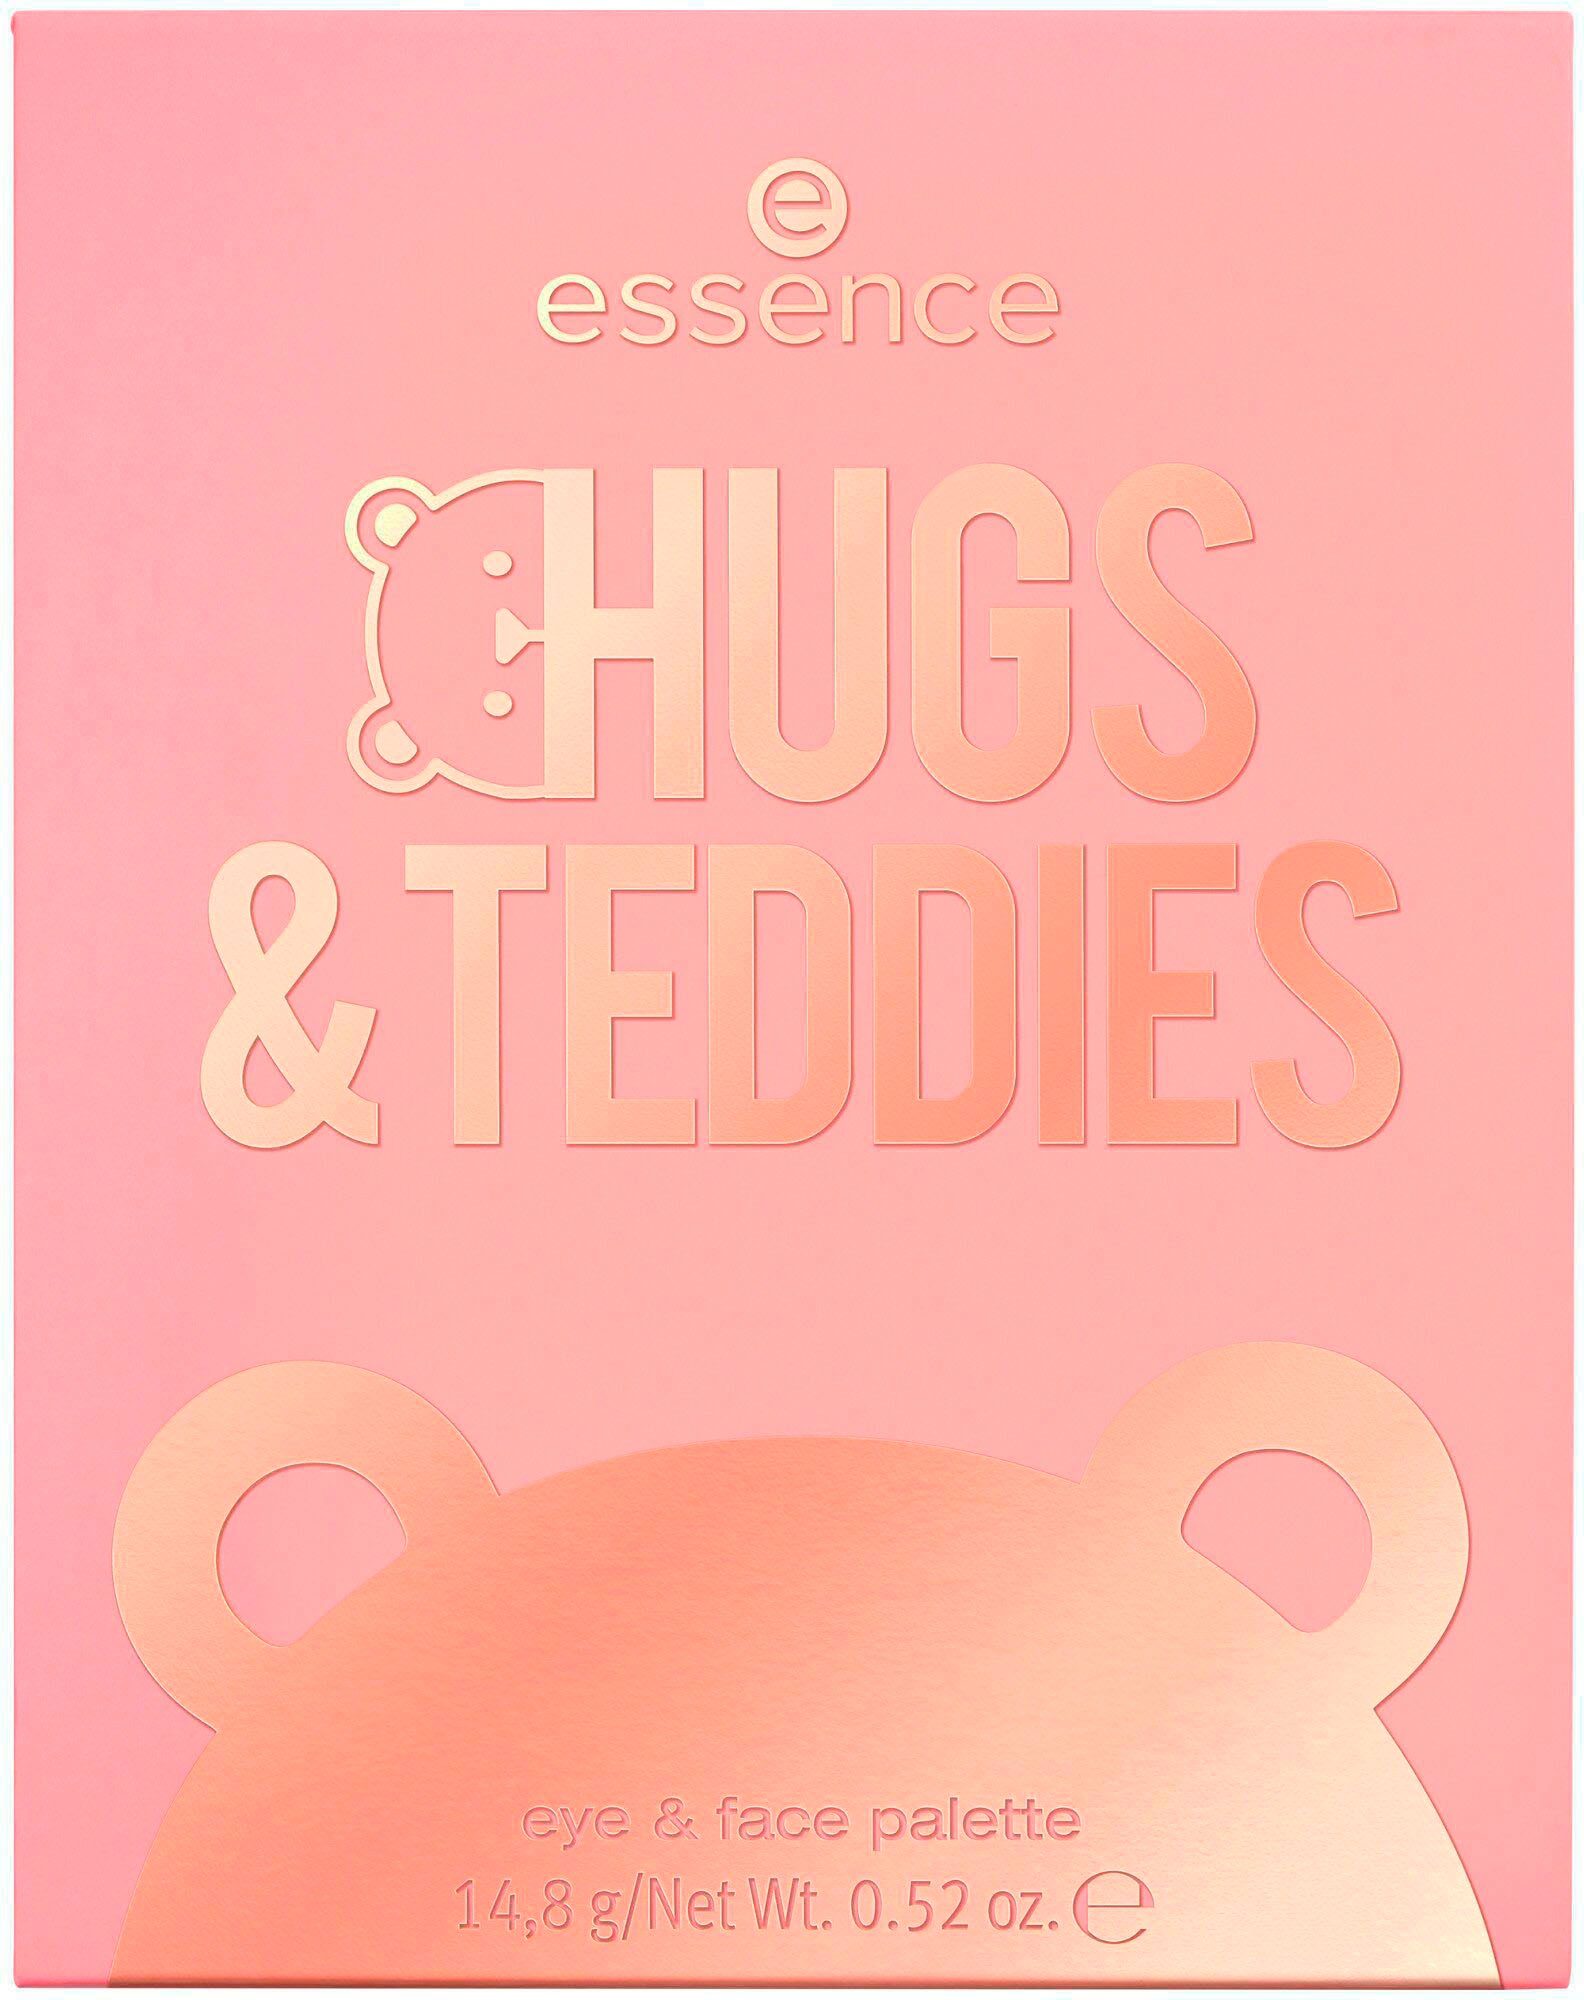 Essence HUGS&TEDDIES Rouge-Palette face & palette eye